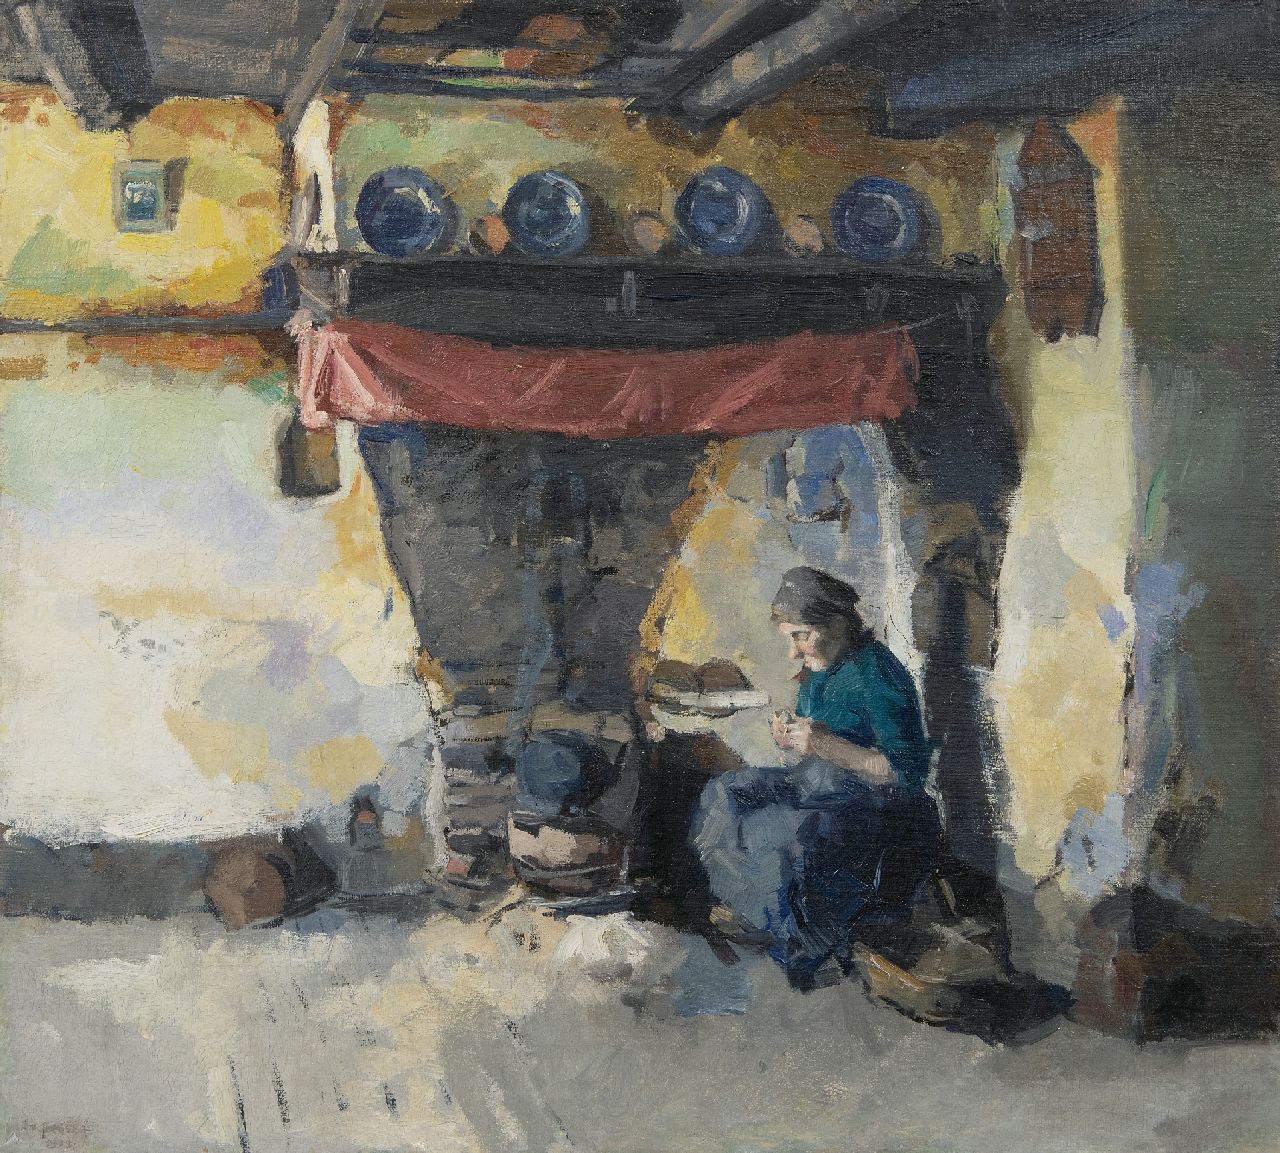 'Emanuël' Samson van Beever | A farmers wife peeling potatoes, oil on canvas, 42.4 x 47.4 cm, signed l.l.